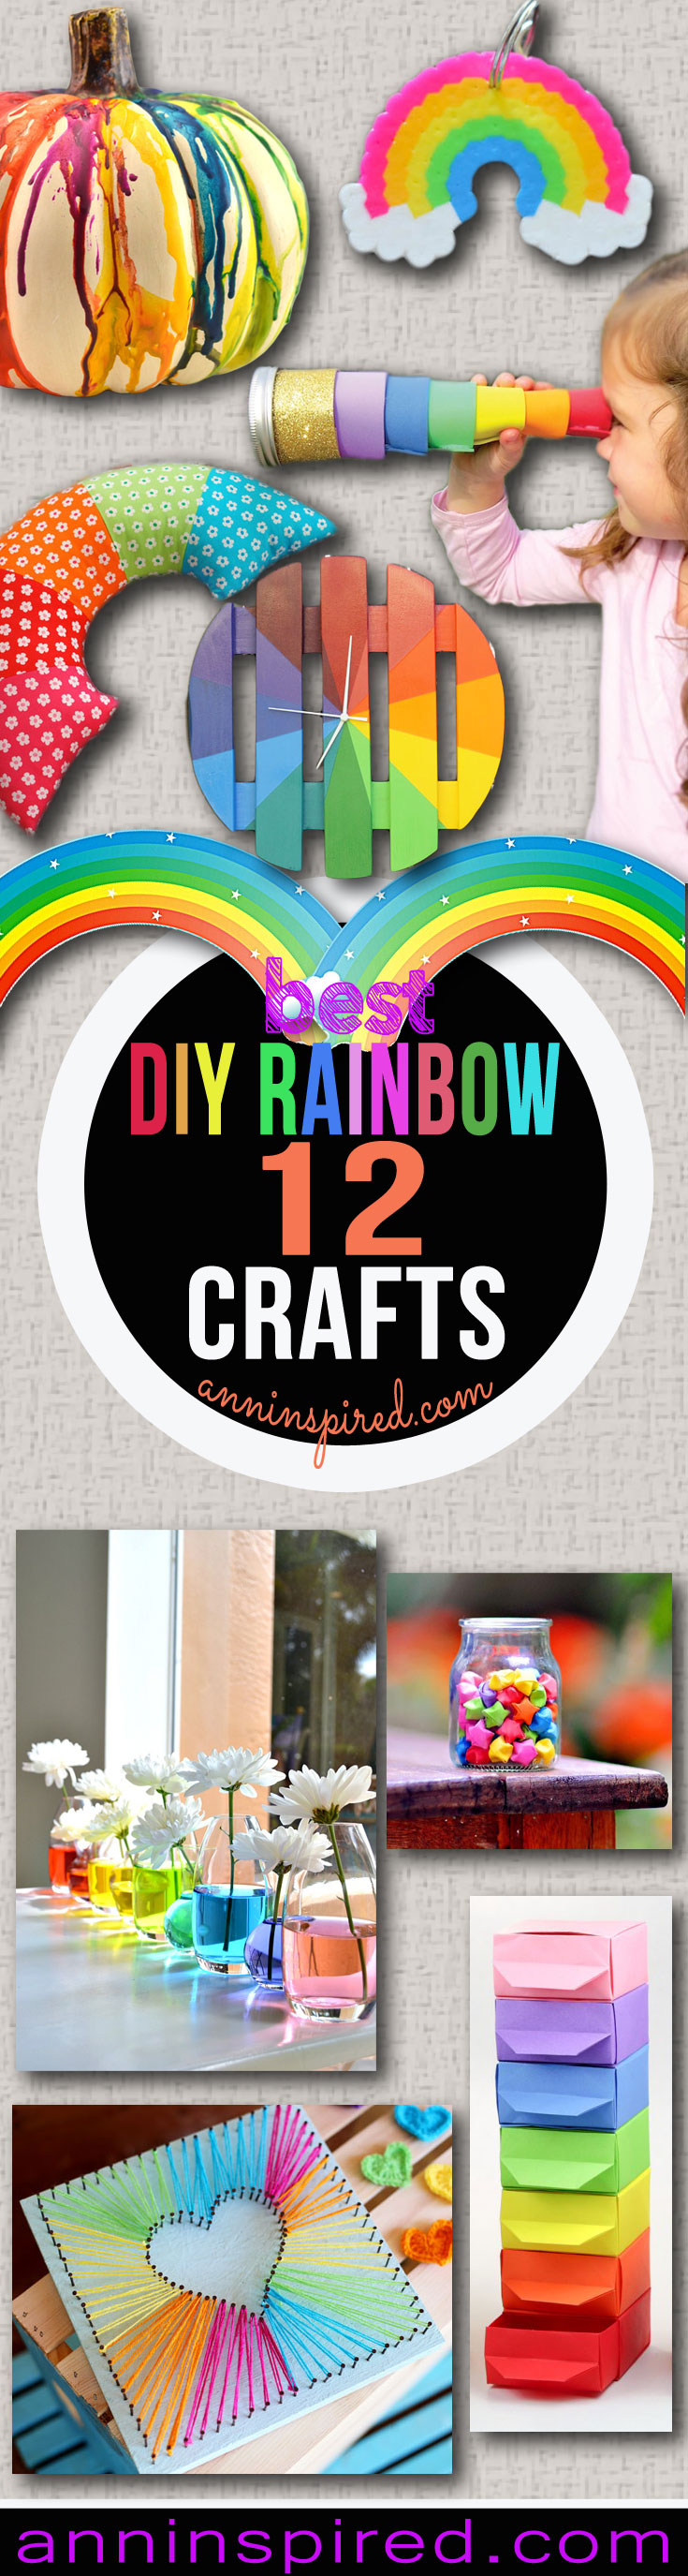 12 DIY Rainbow Crafts To Make You Smile